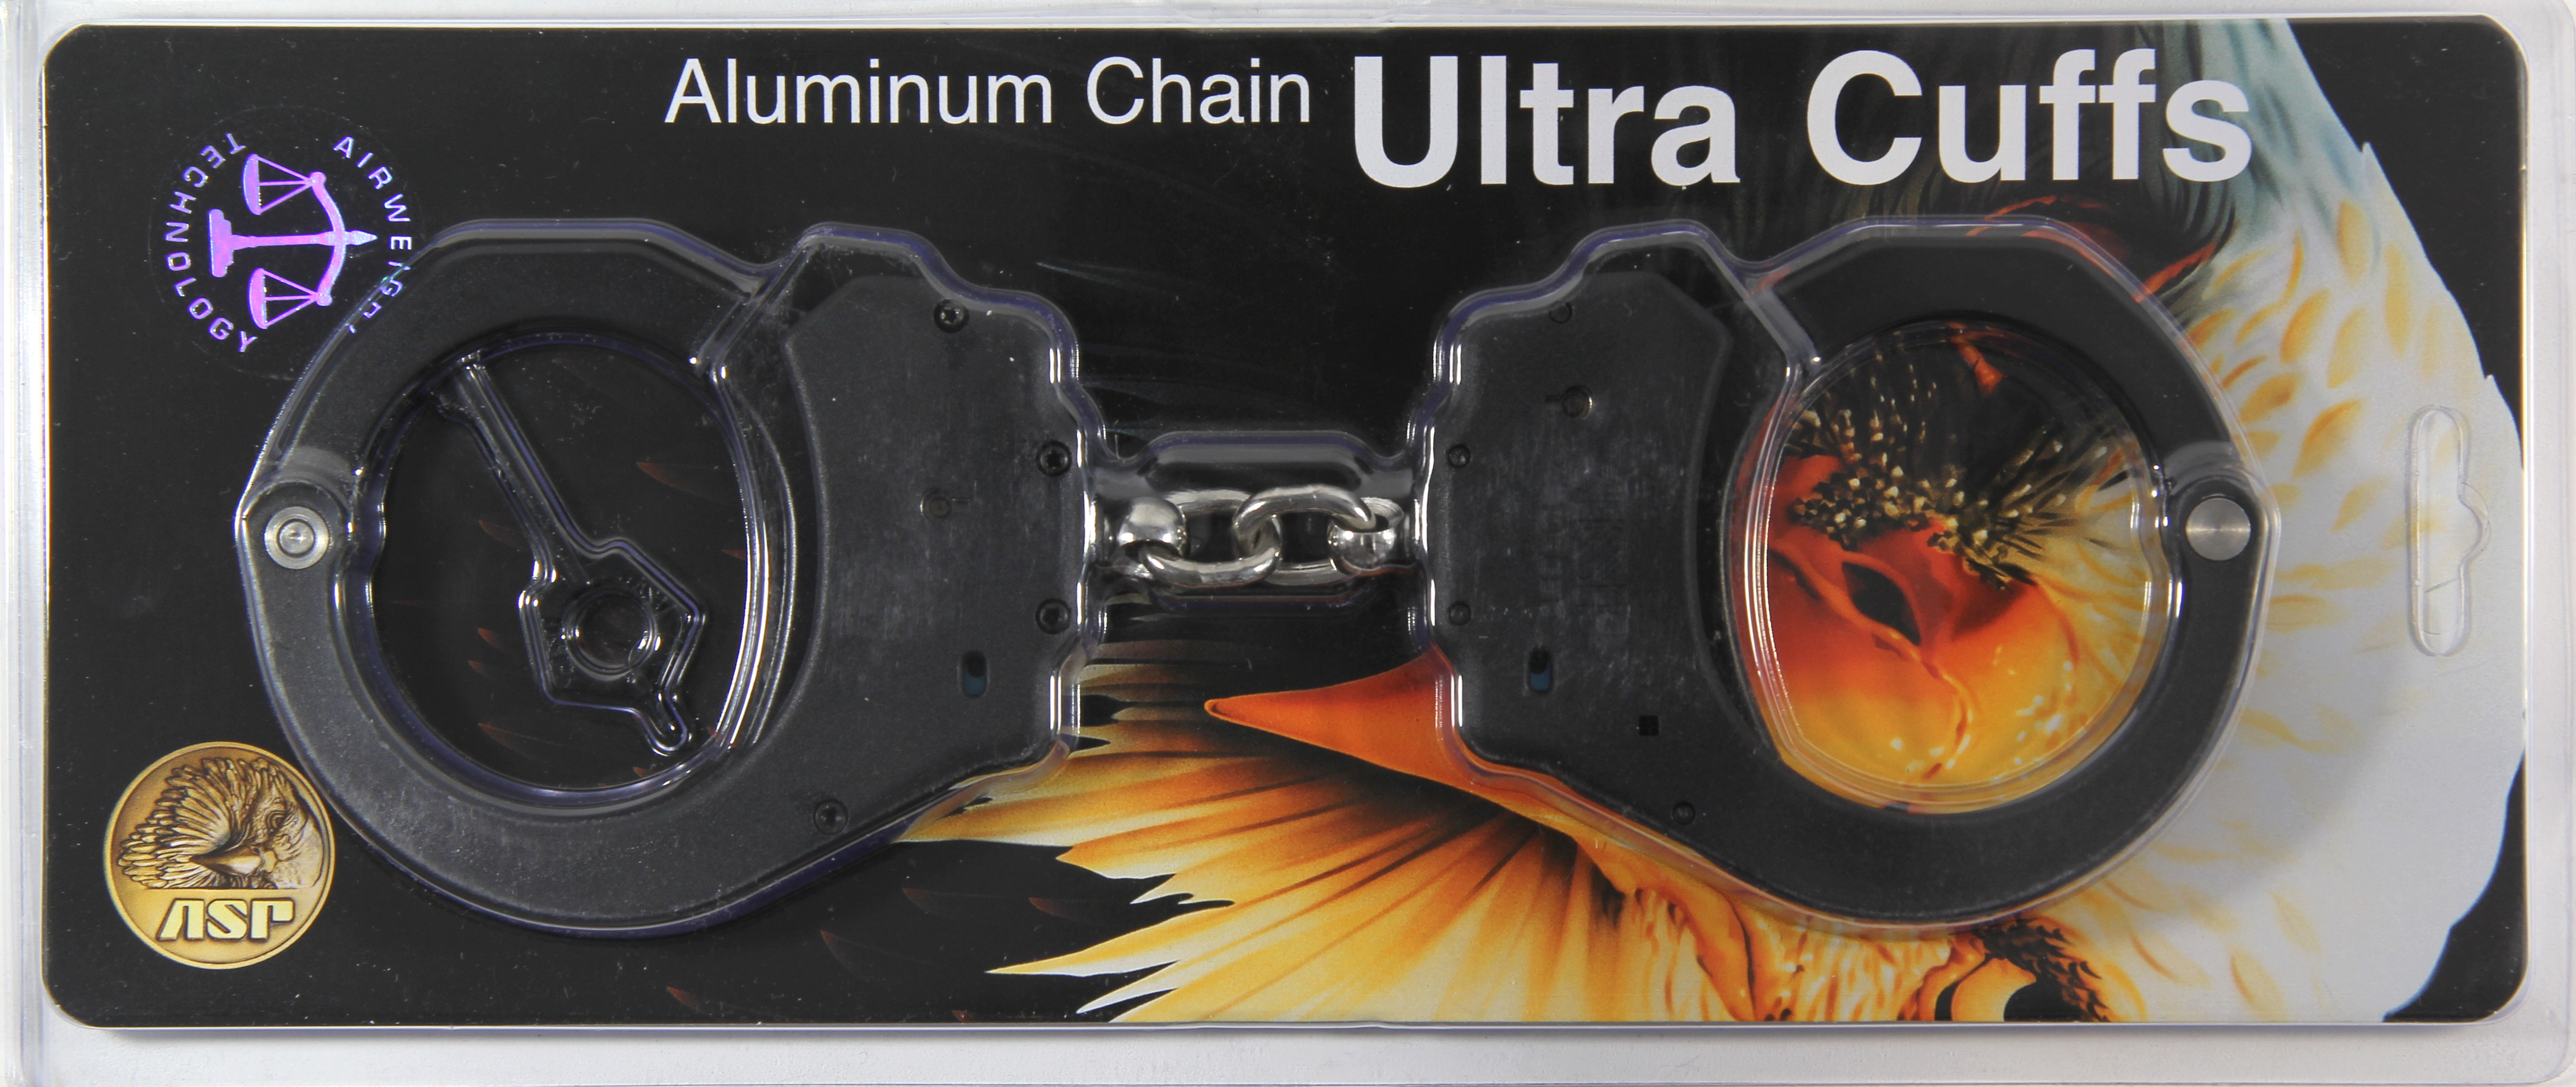 ASP Aluminium Chain Ultra Cuffs (2 Pawl) - 46110 / Model 450